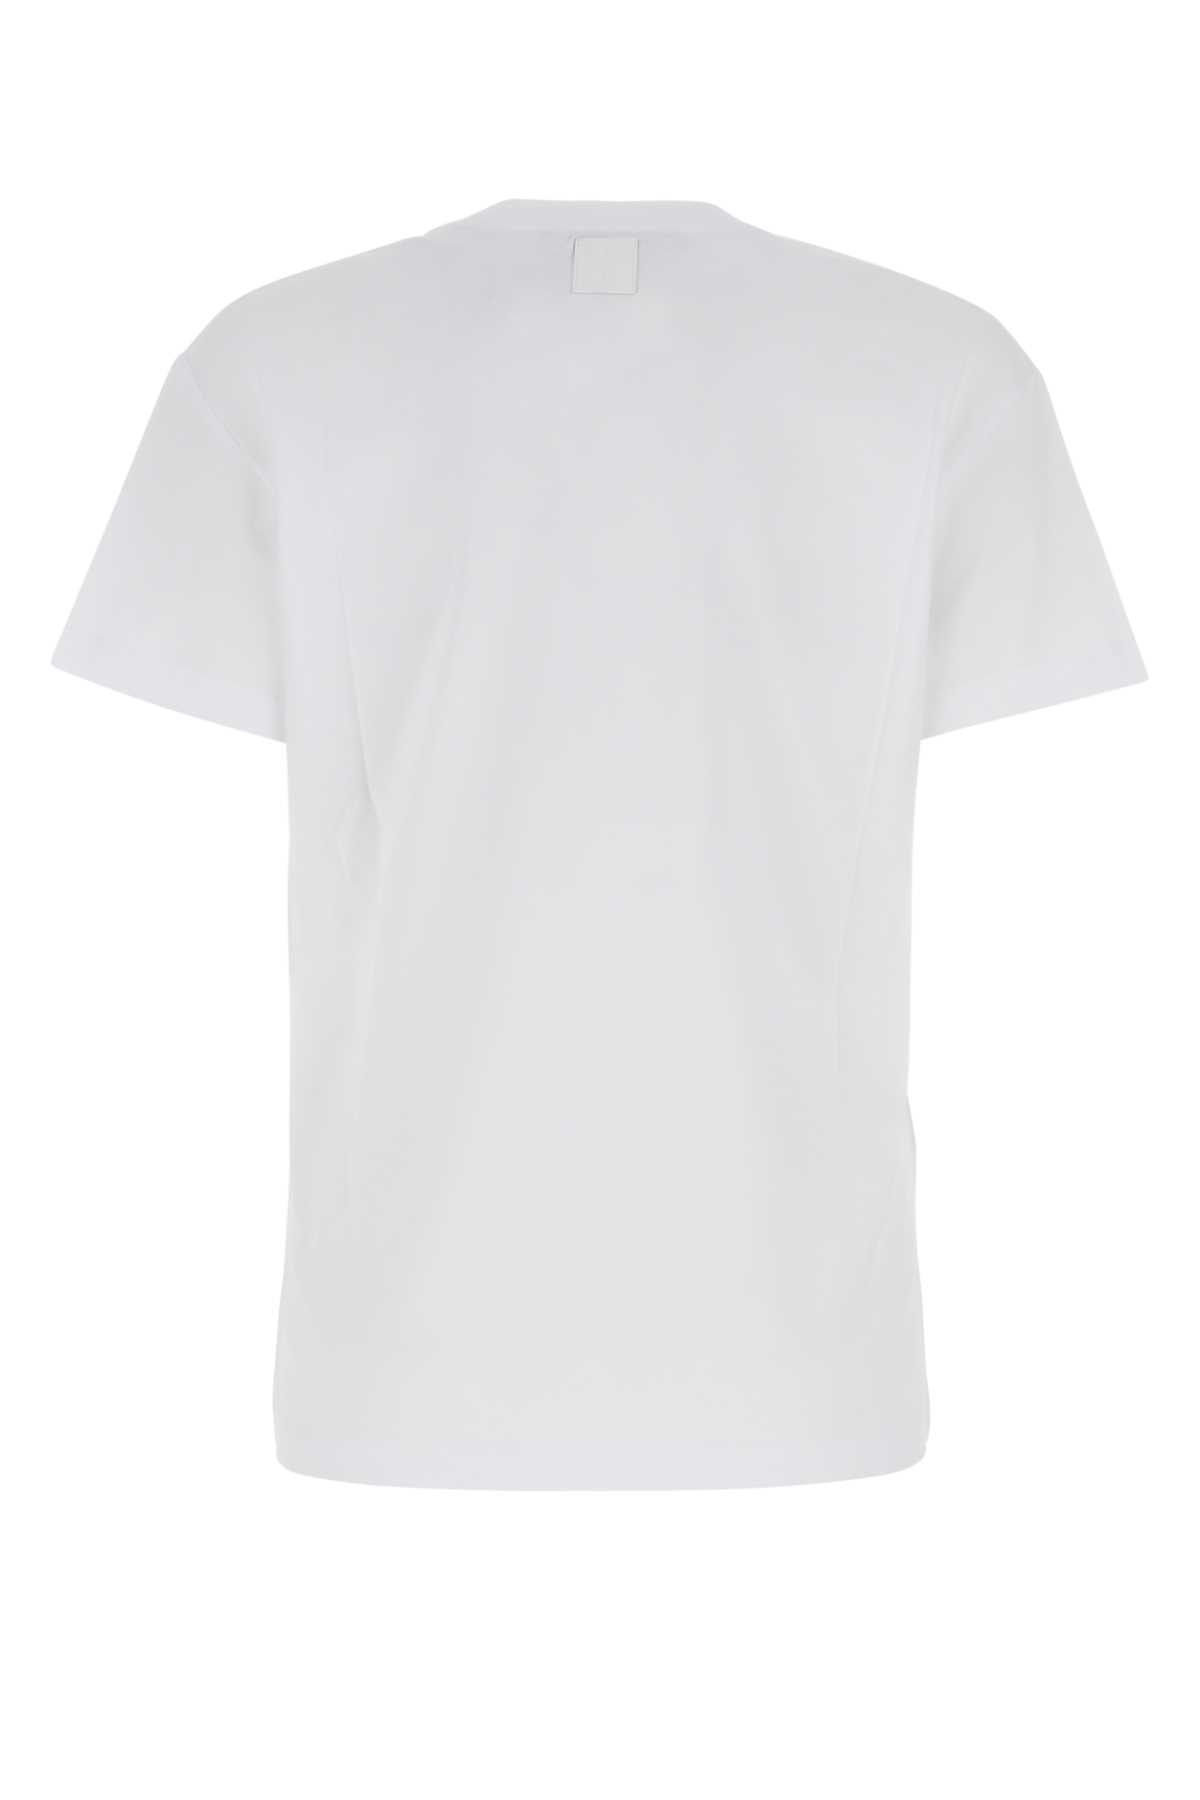 Raf Simons White Cotton T-shirt In 0010